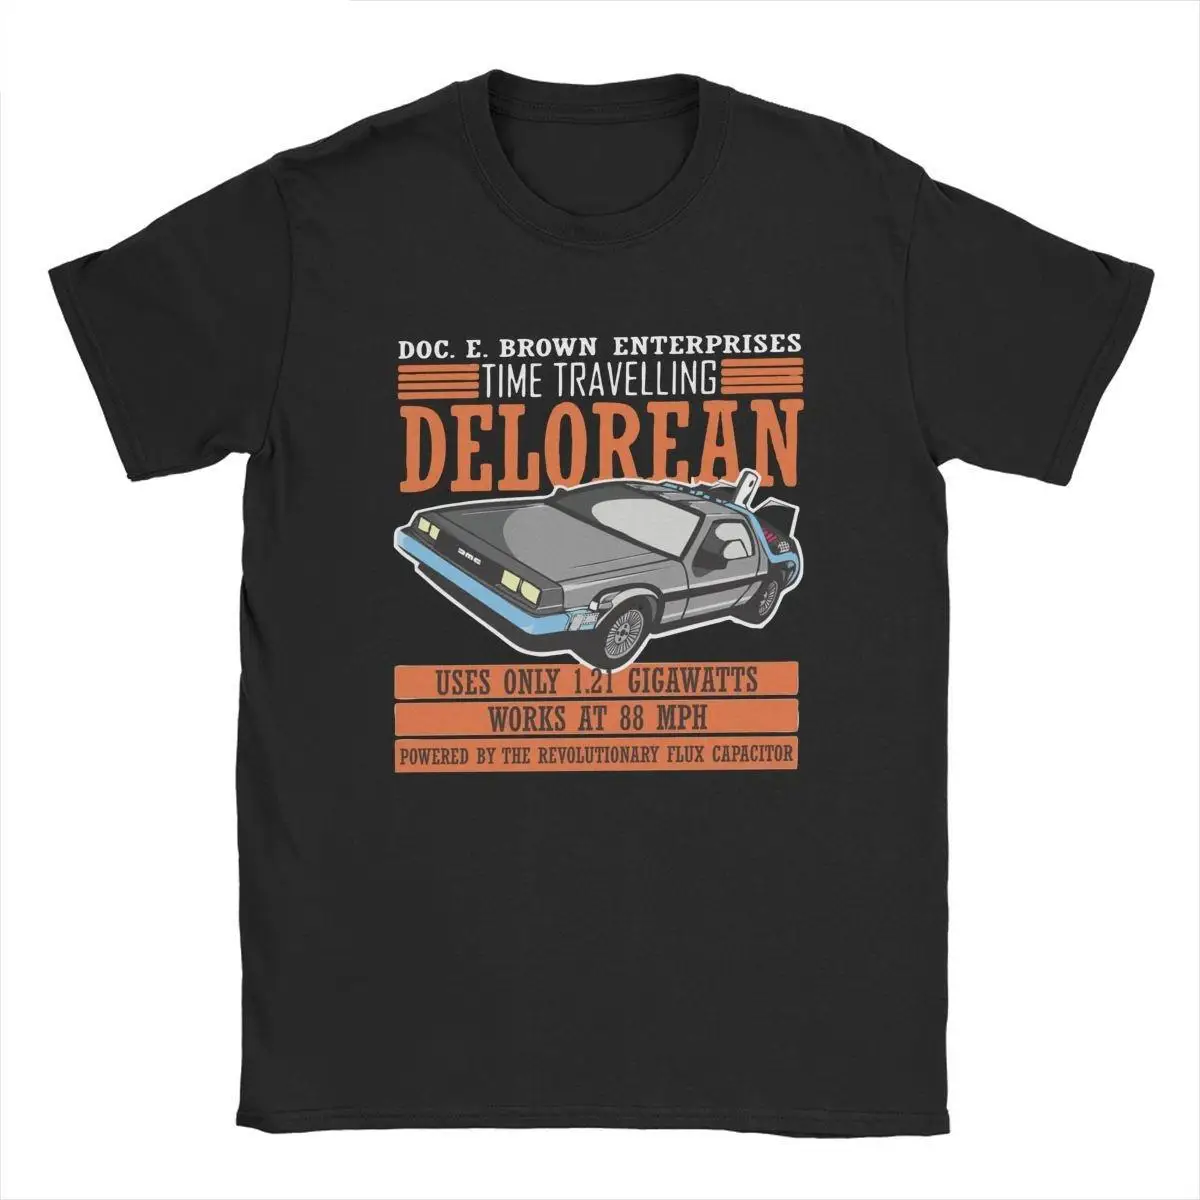 Doc E. Brown Time Travelling Delorean T Shirt Men's 100% Cotton Humor T-Shirt O Neck Back to Future Tees Short Sleeve Tops